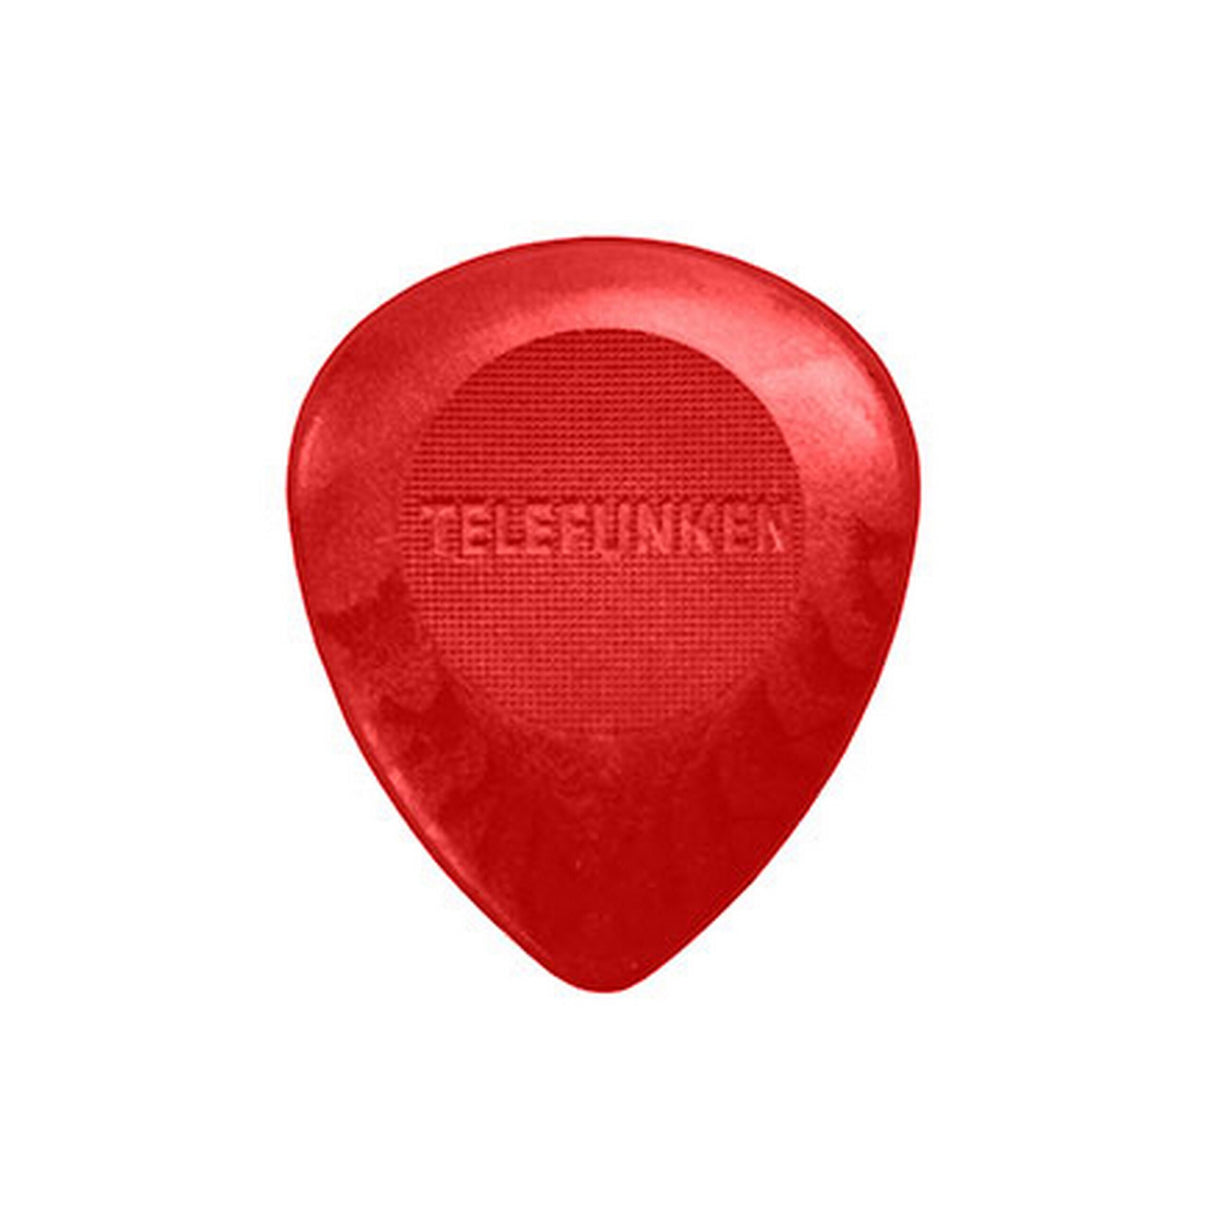 Telefunken 3mm Circle 6 Pack Bass Guitar Picks, Red